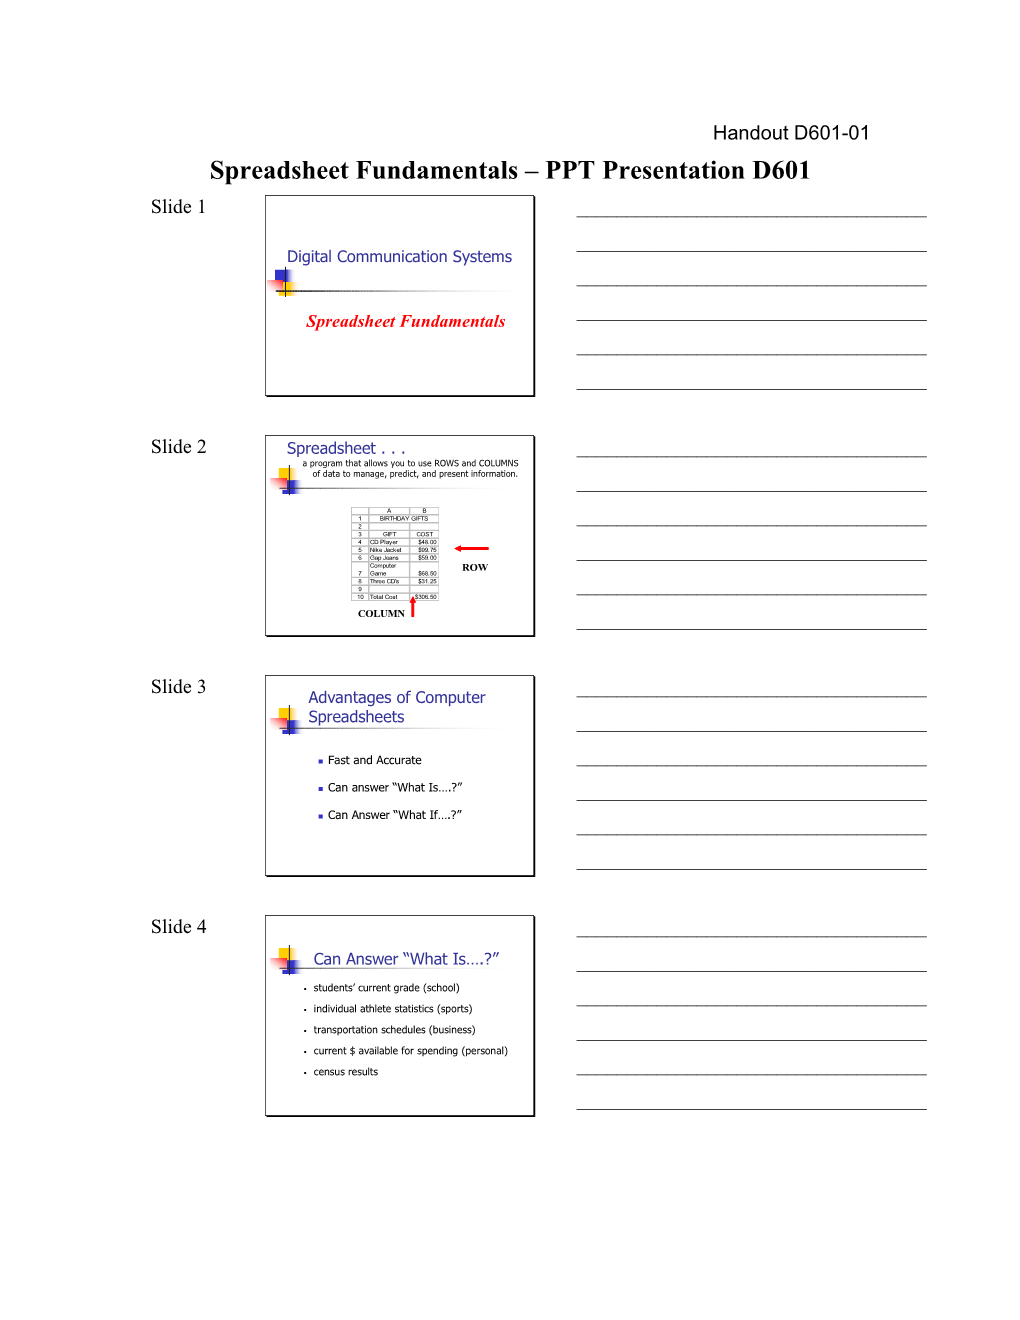 Spreadsheet Fundamentals PPT Presentation D601